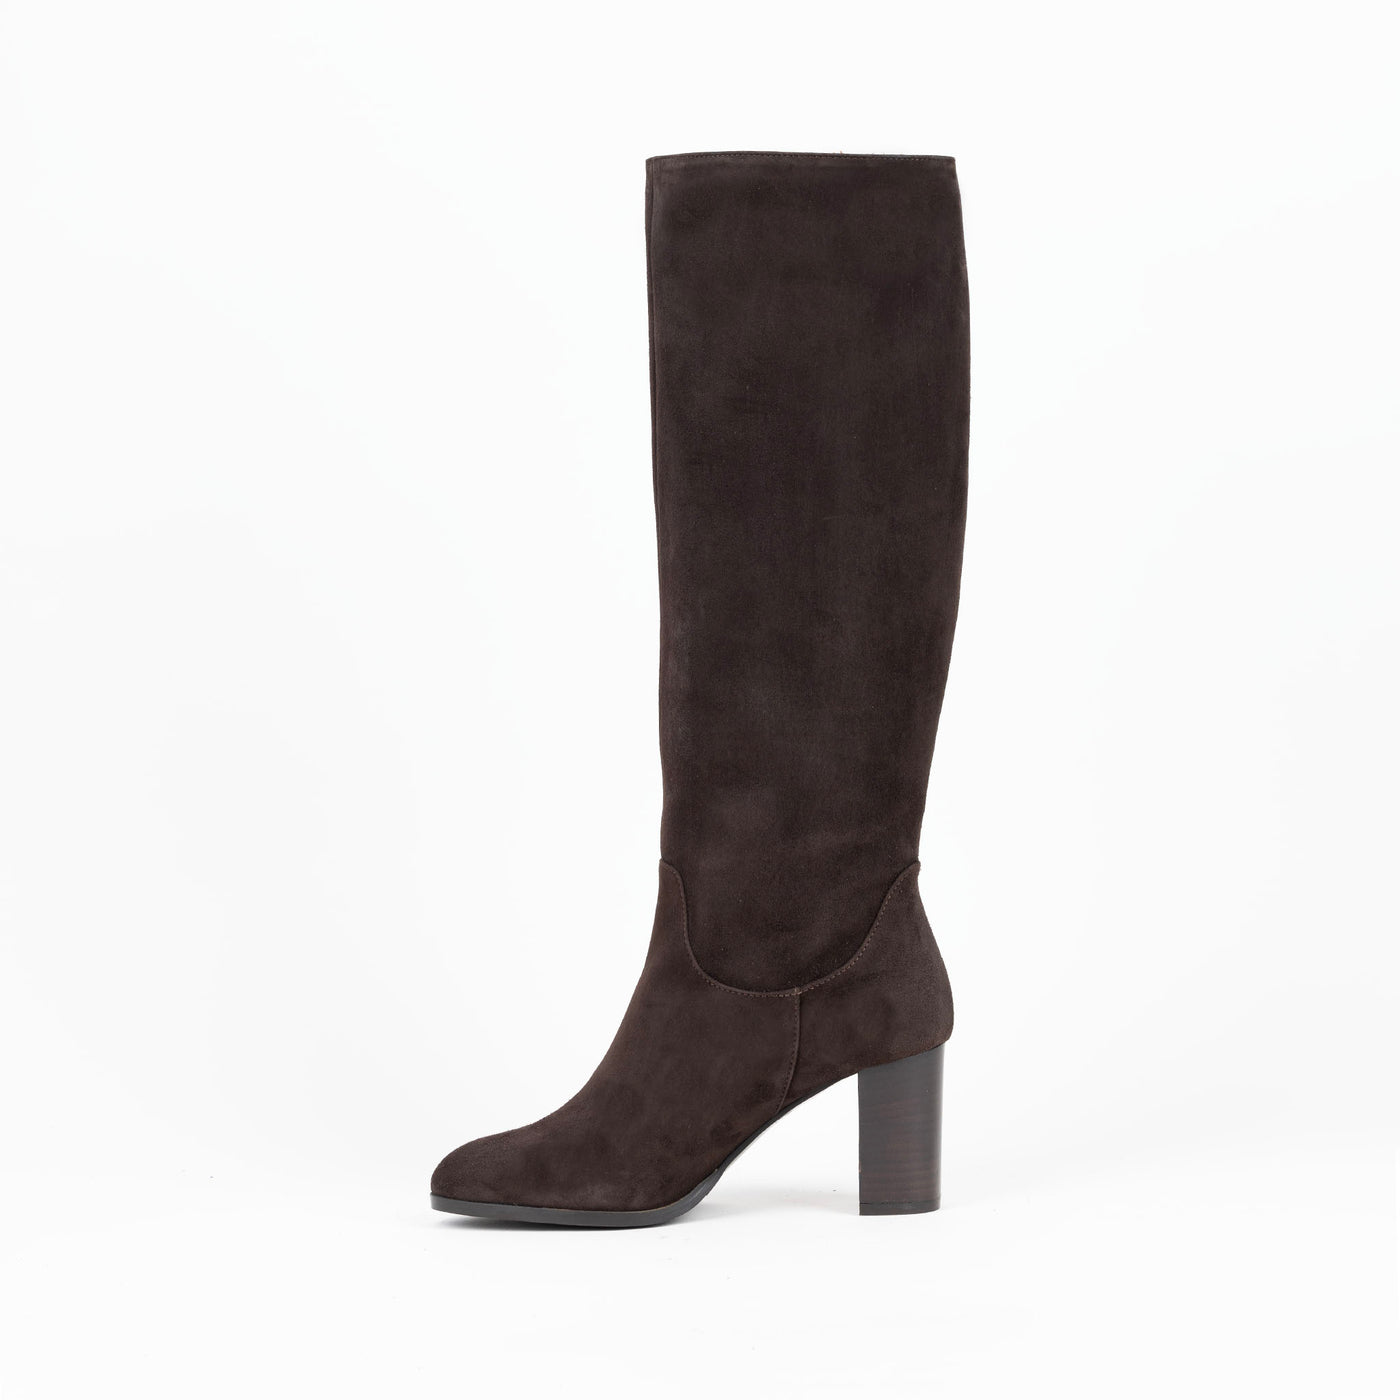 Dark brown suede leather boots with block heels